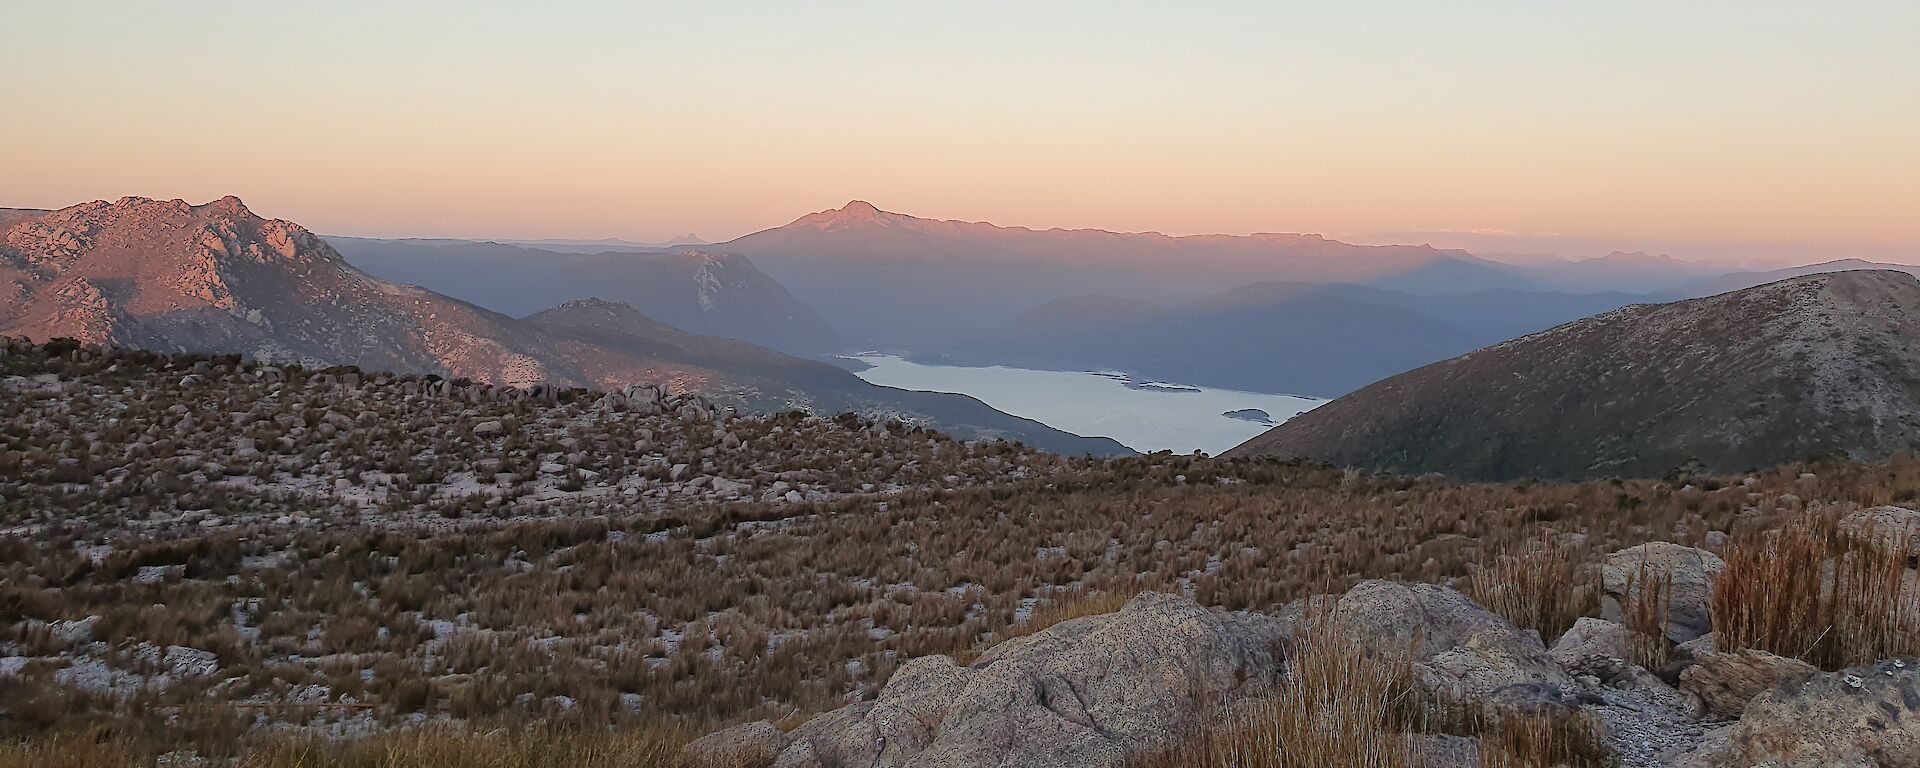 mountains and lake in Tasmania